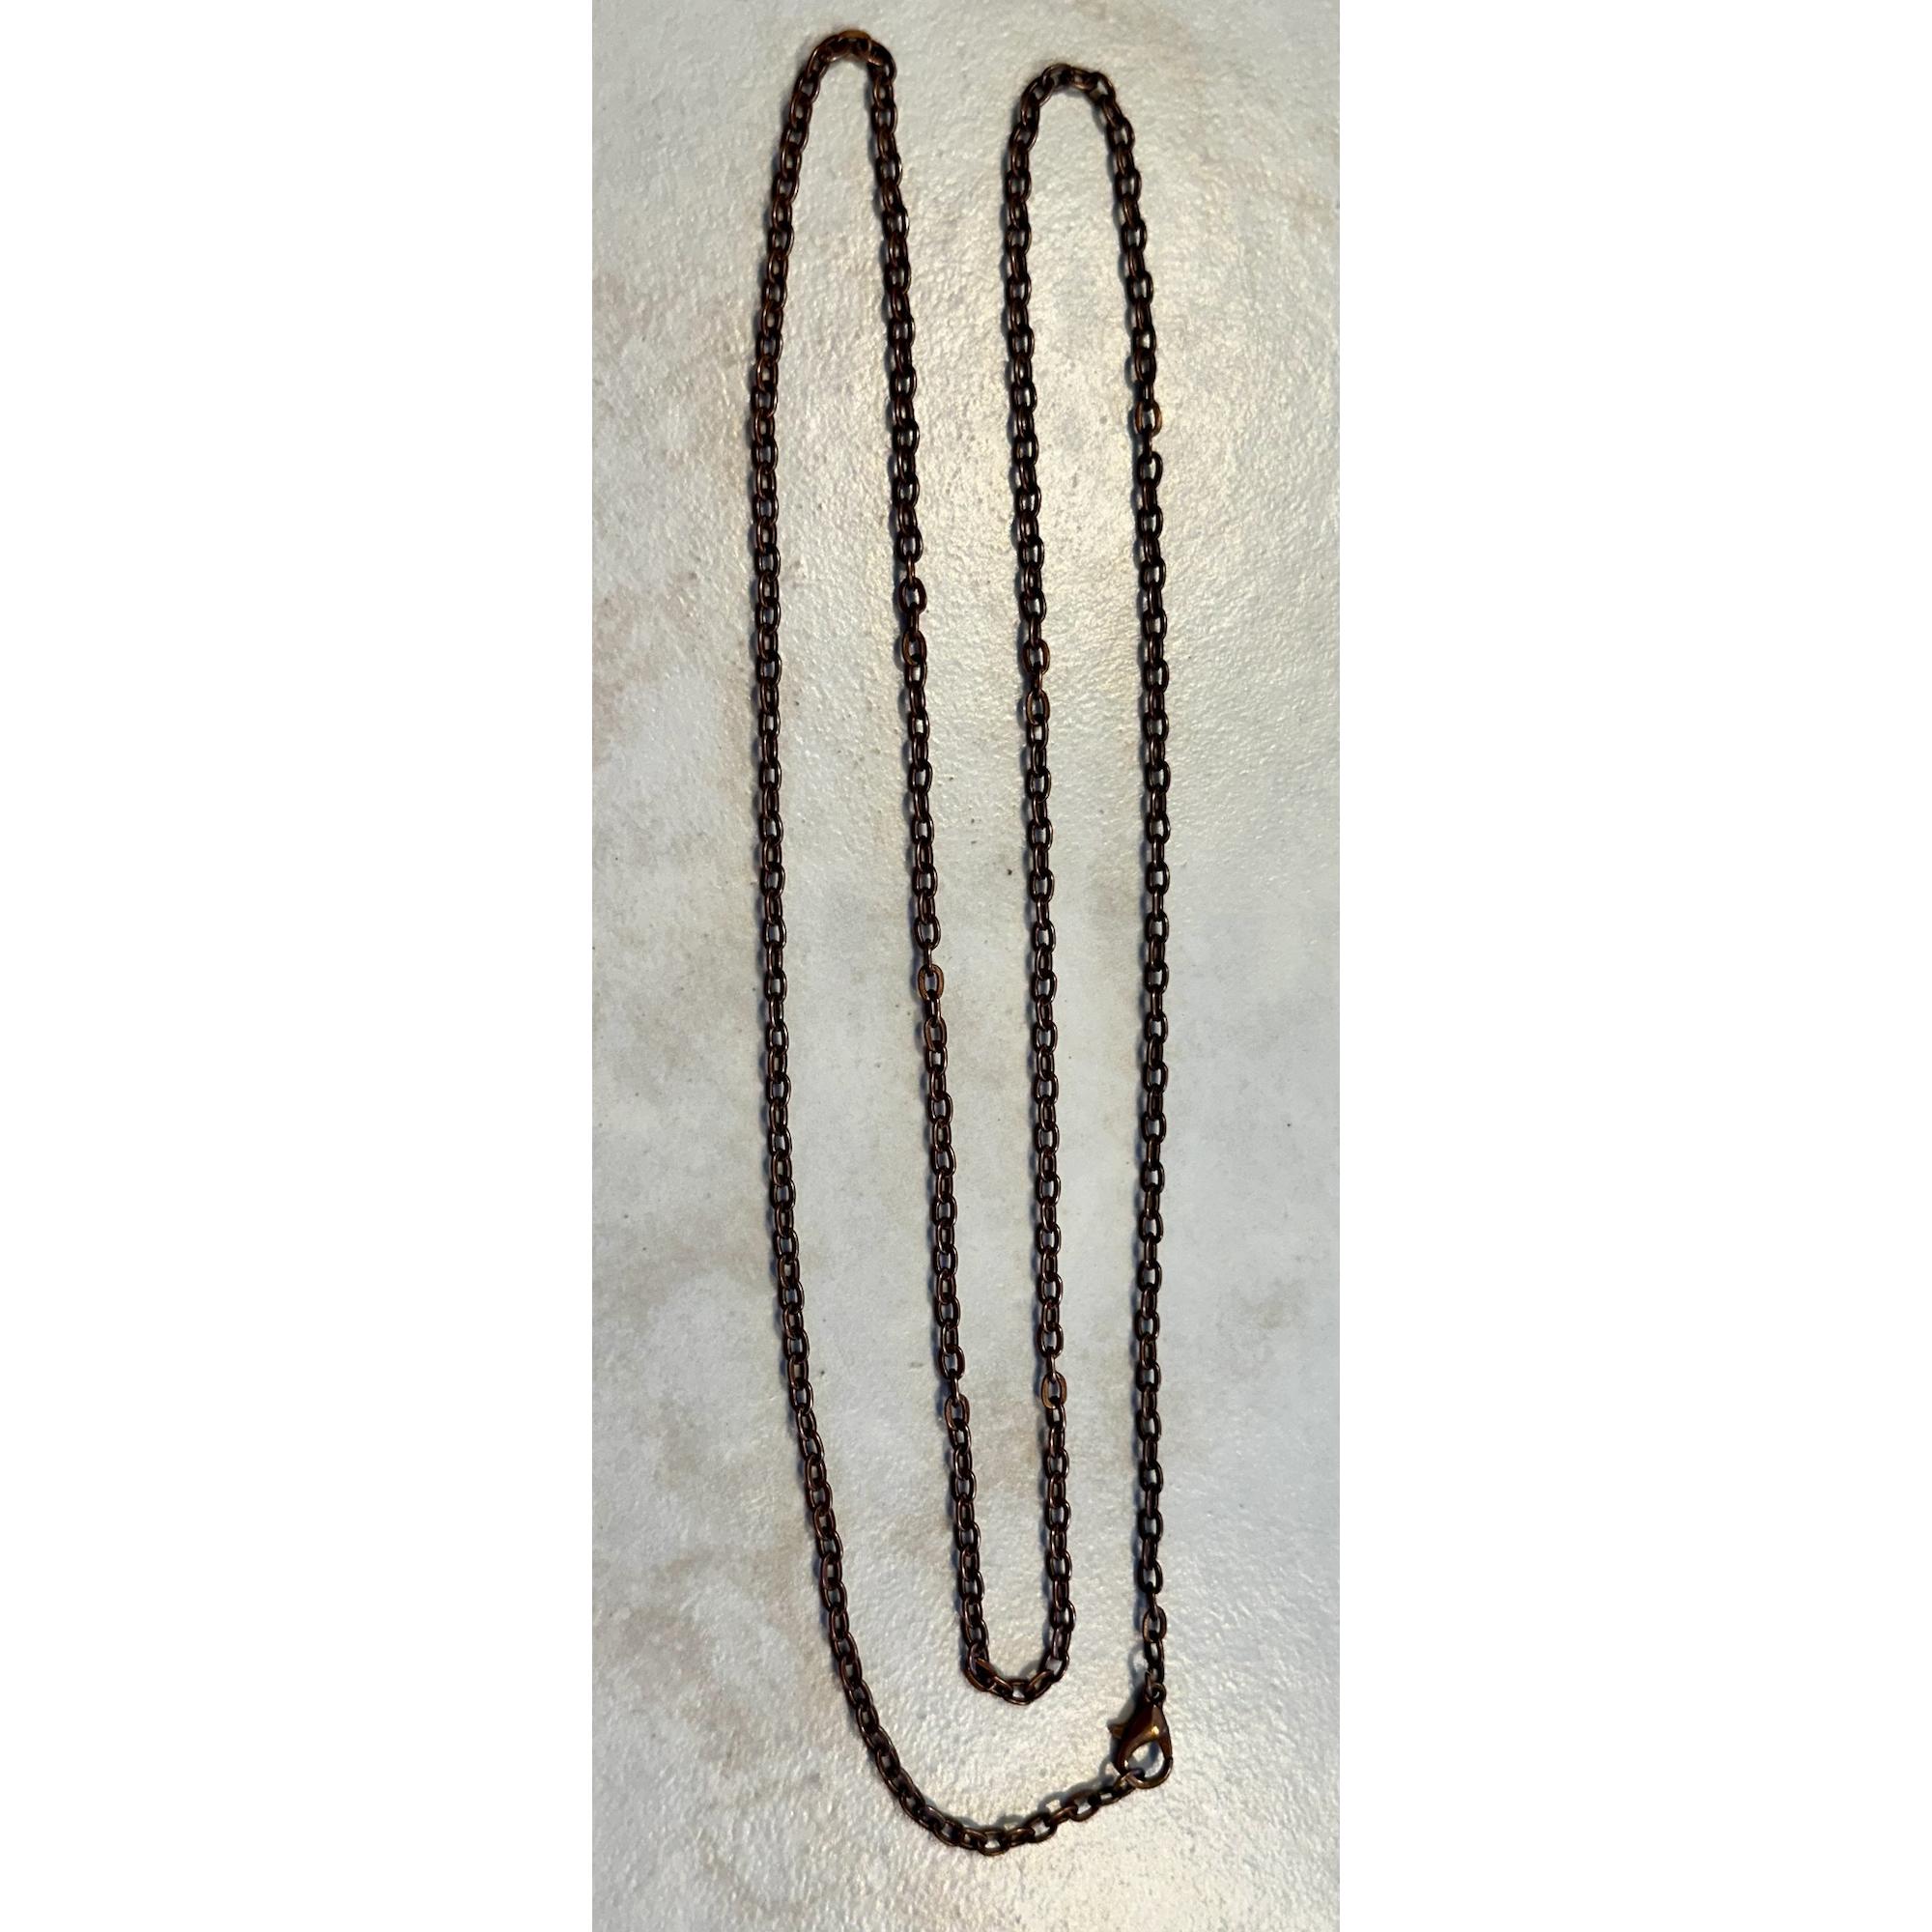 Megalodon Pendant, beautiful enamel, adjustable leather cord Prehistoric Online